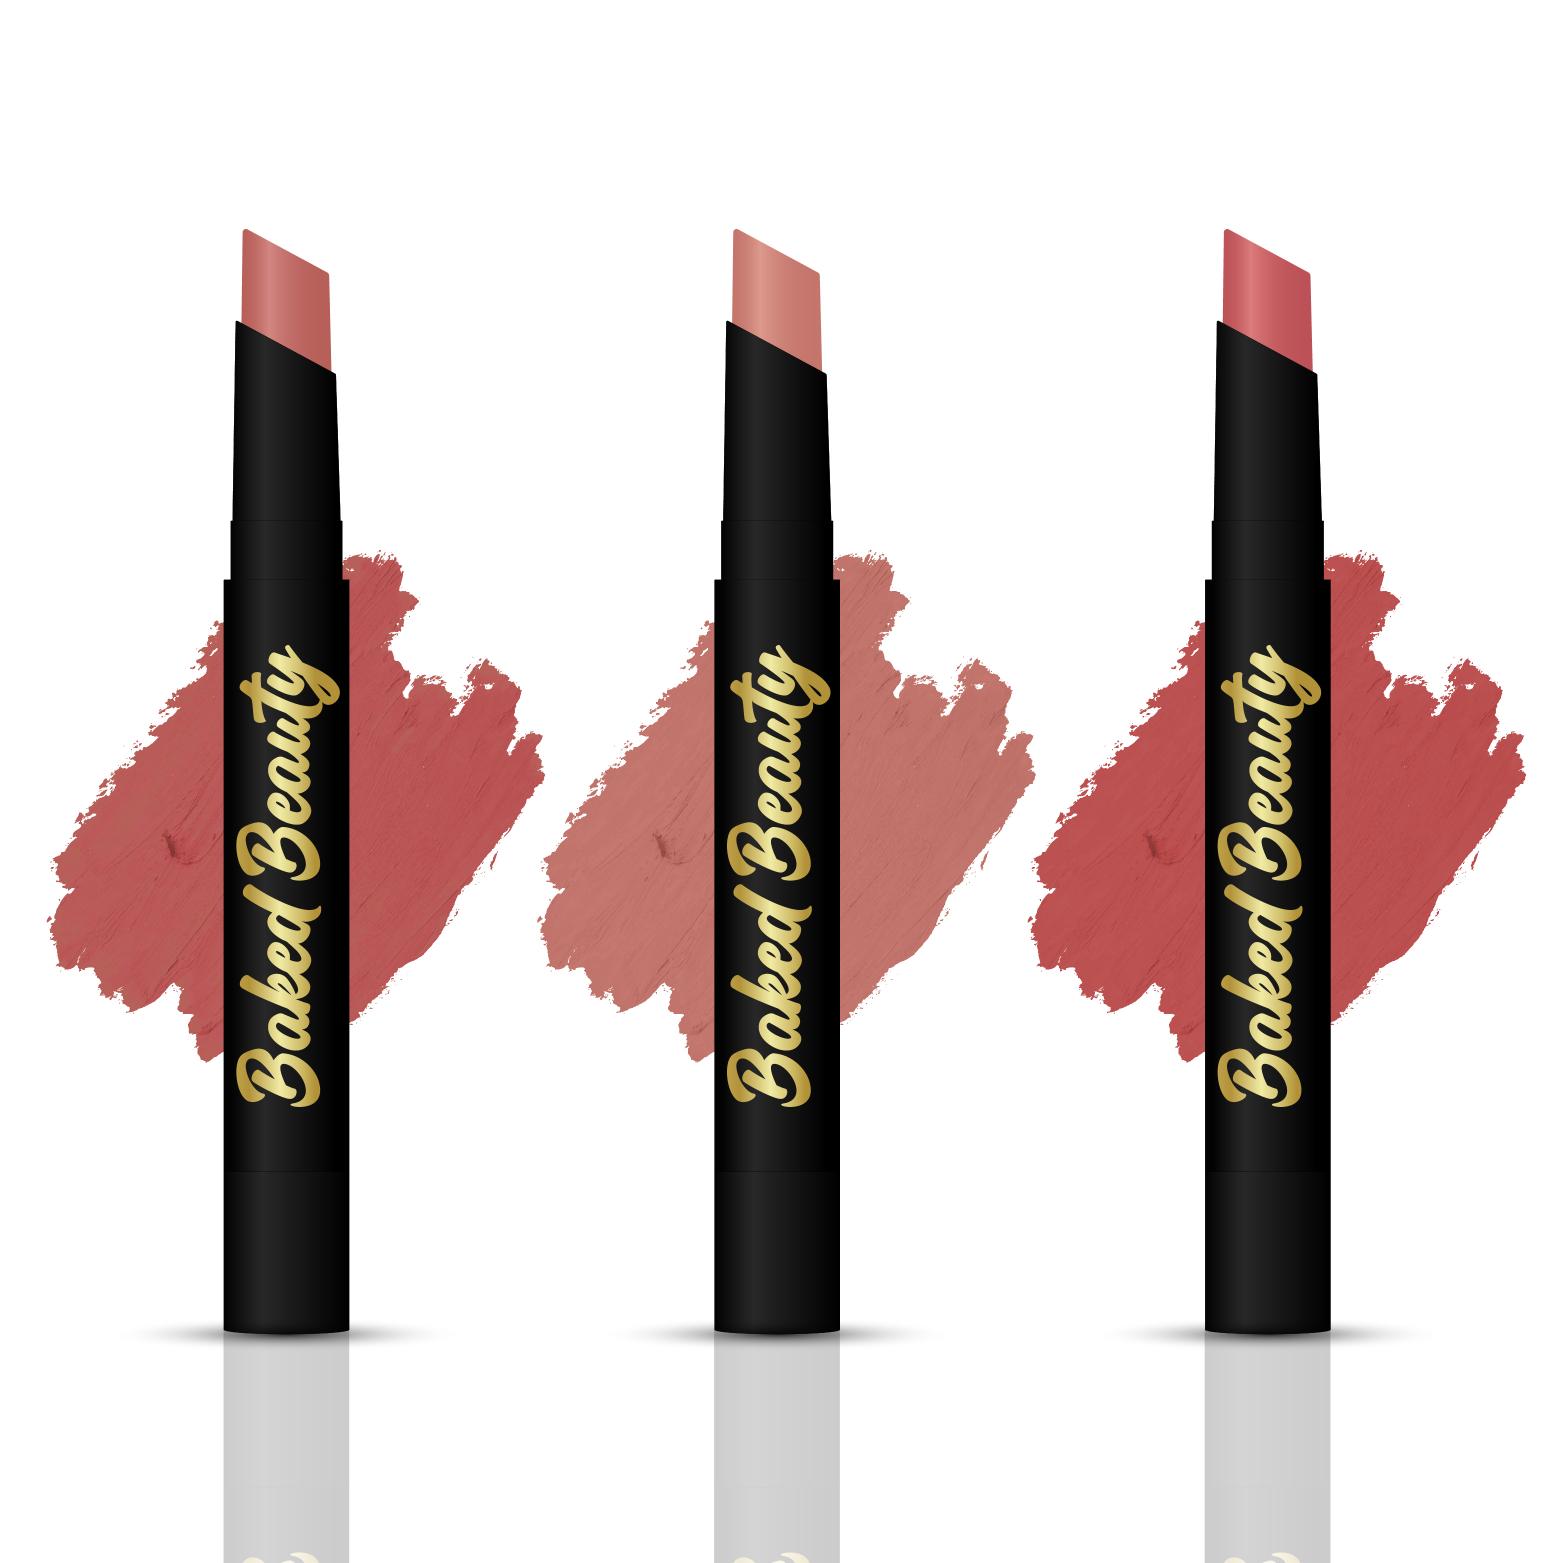 My Crayon Mocha Talk Super Matte Lip Cream Lipsticks (Pack of 3)